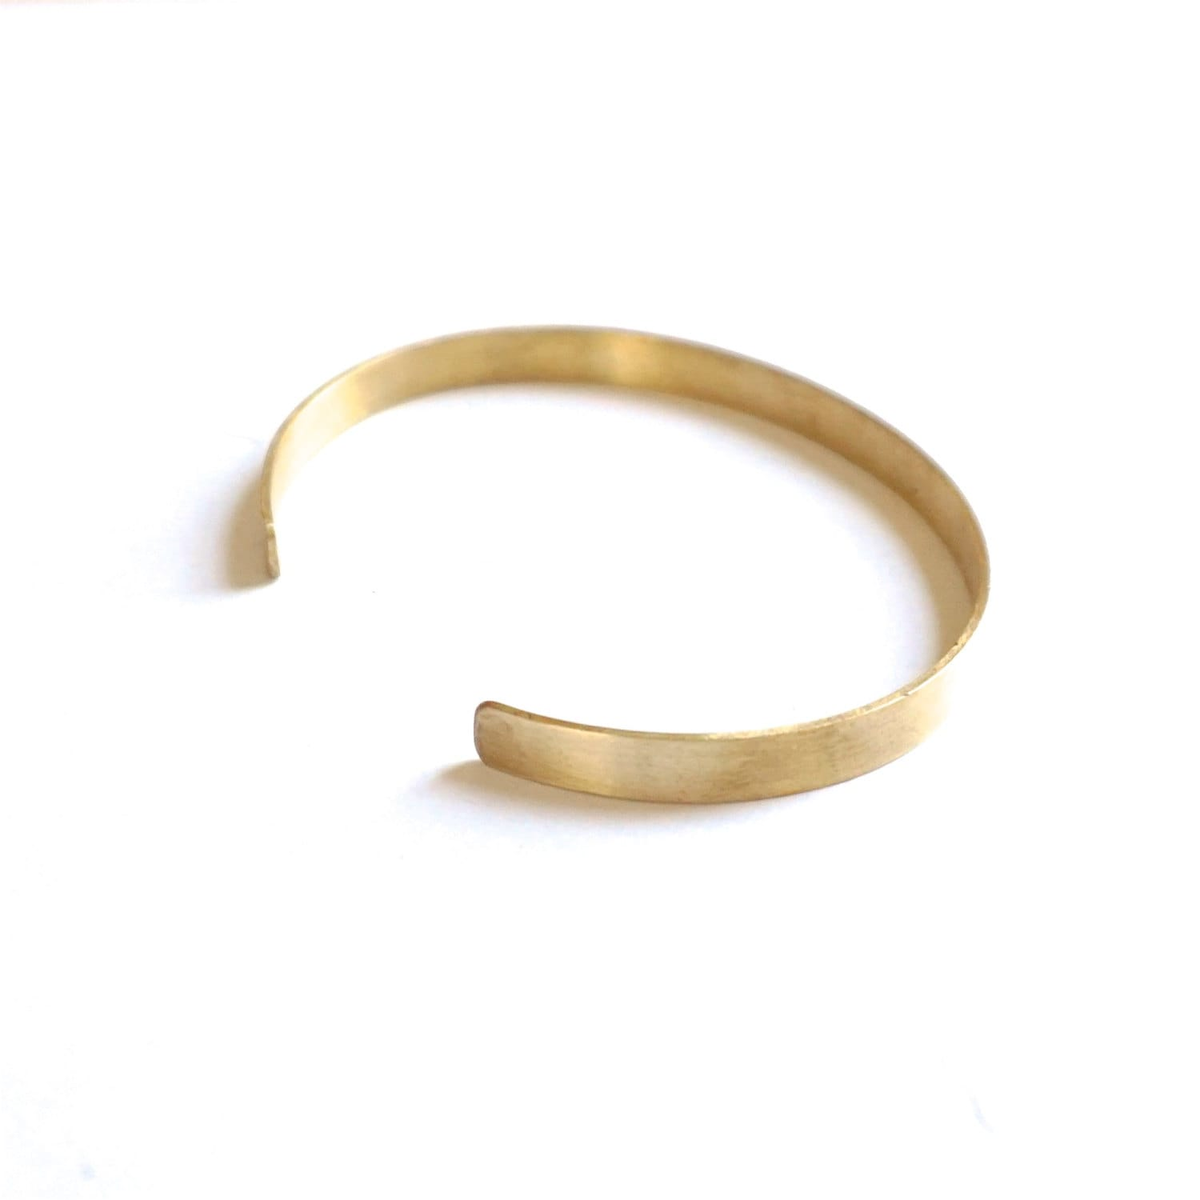 5mm Thin Flat Cuff Bracelet - Textured & Polished Options 0354